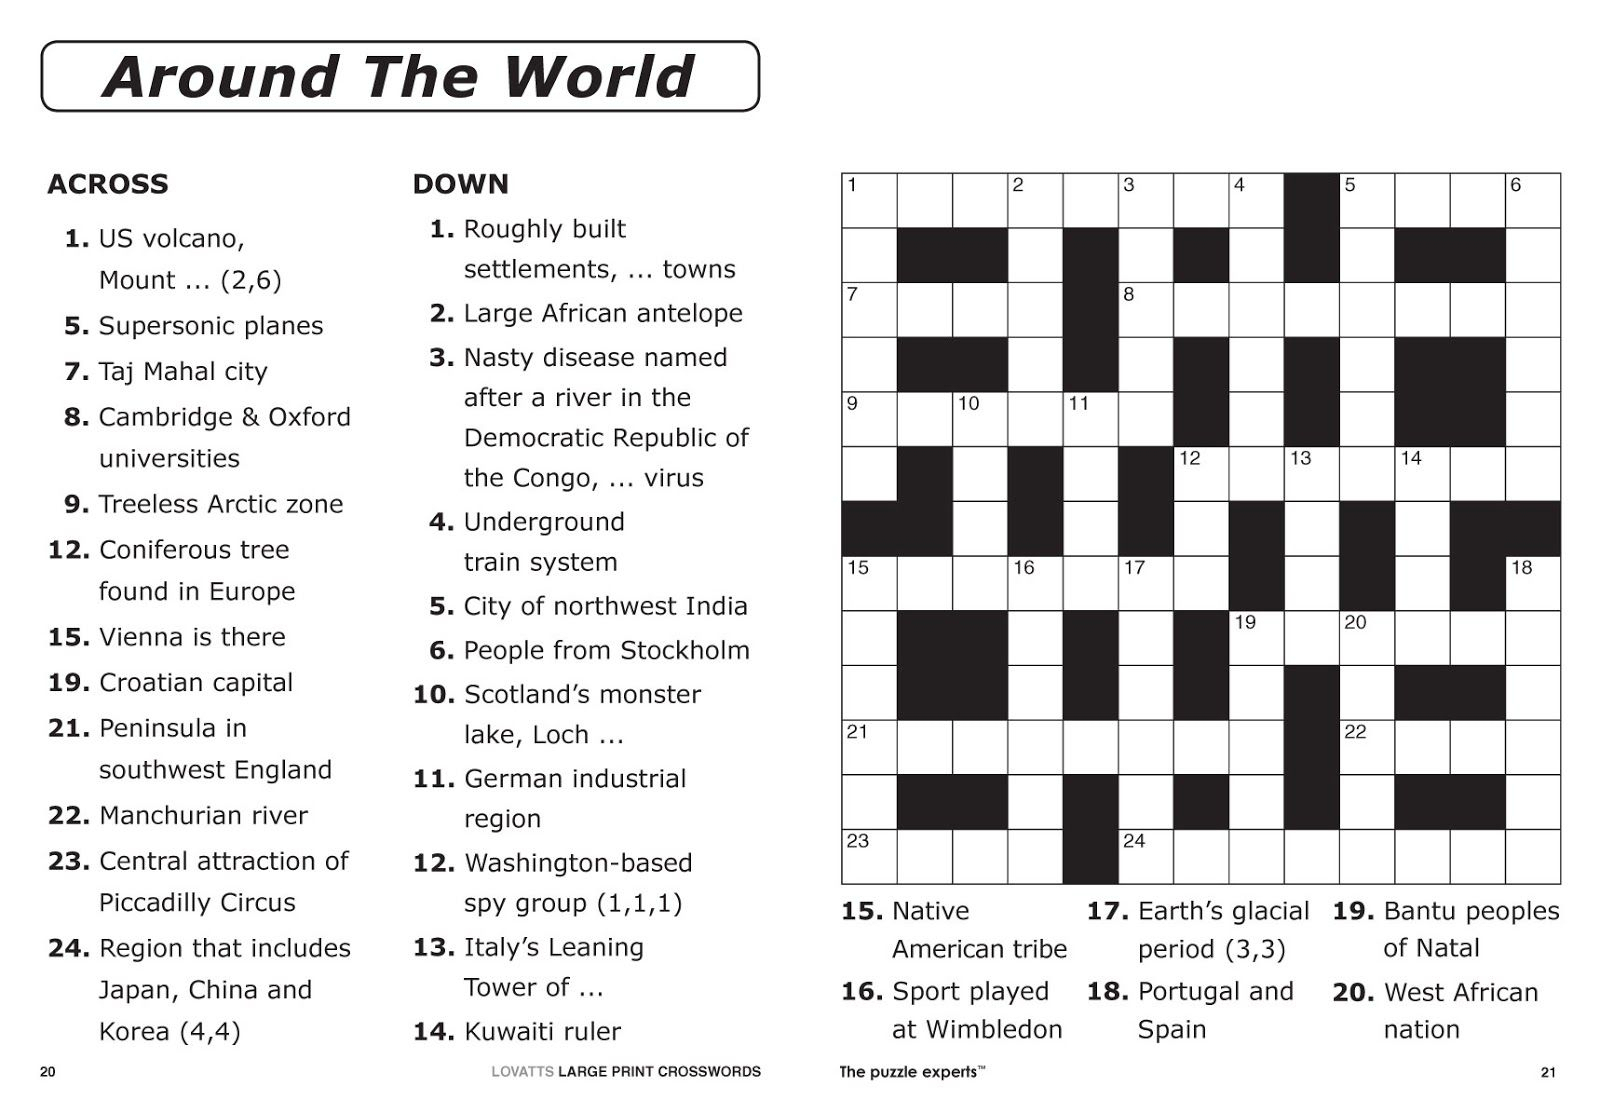 Free Printable Large Print Crossword Puzzles | M3U8 - Simple Crossword Puzzles Printable Free